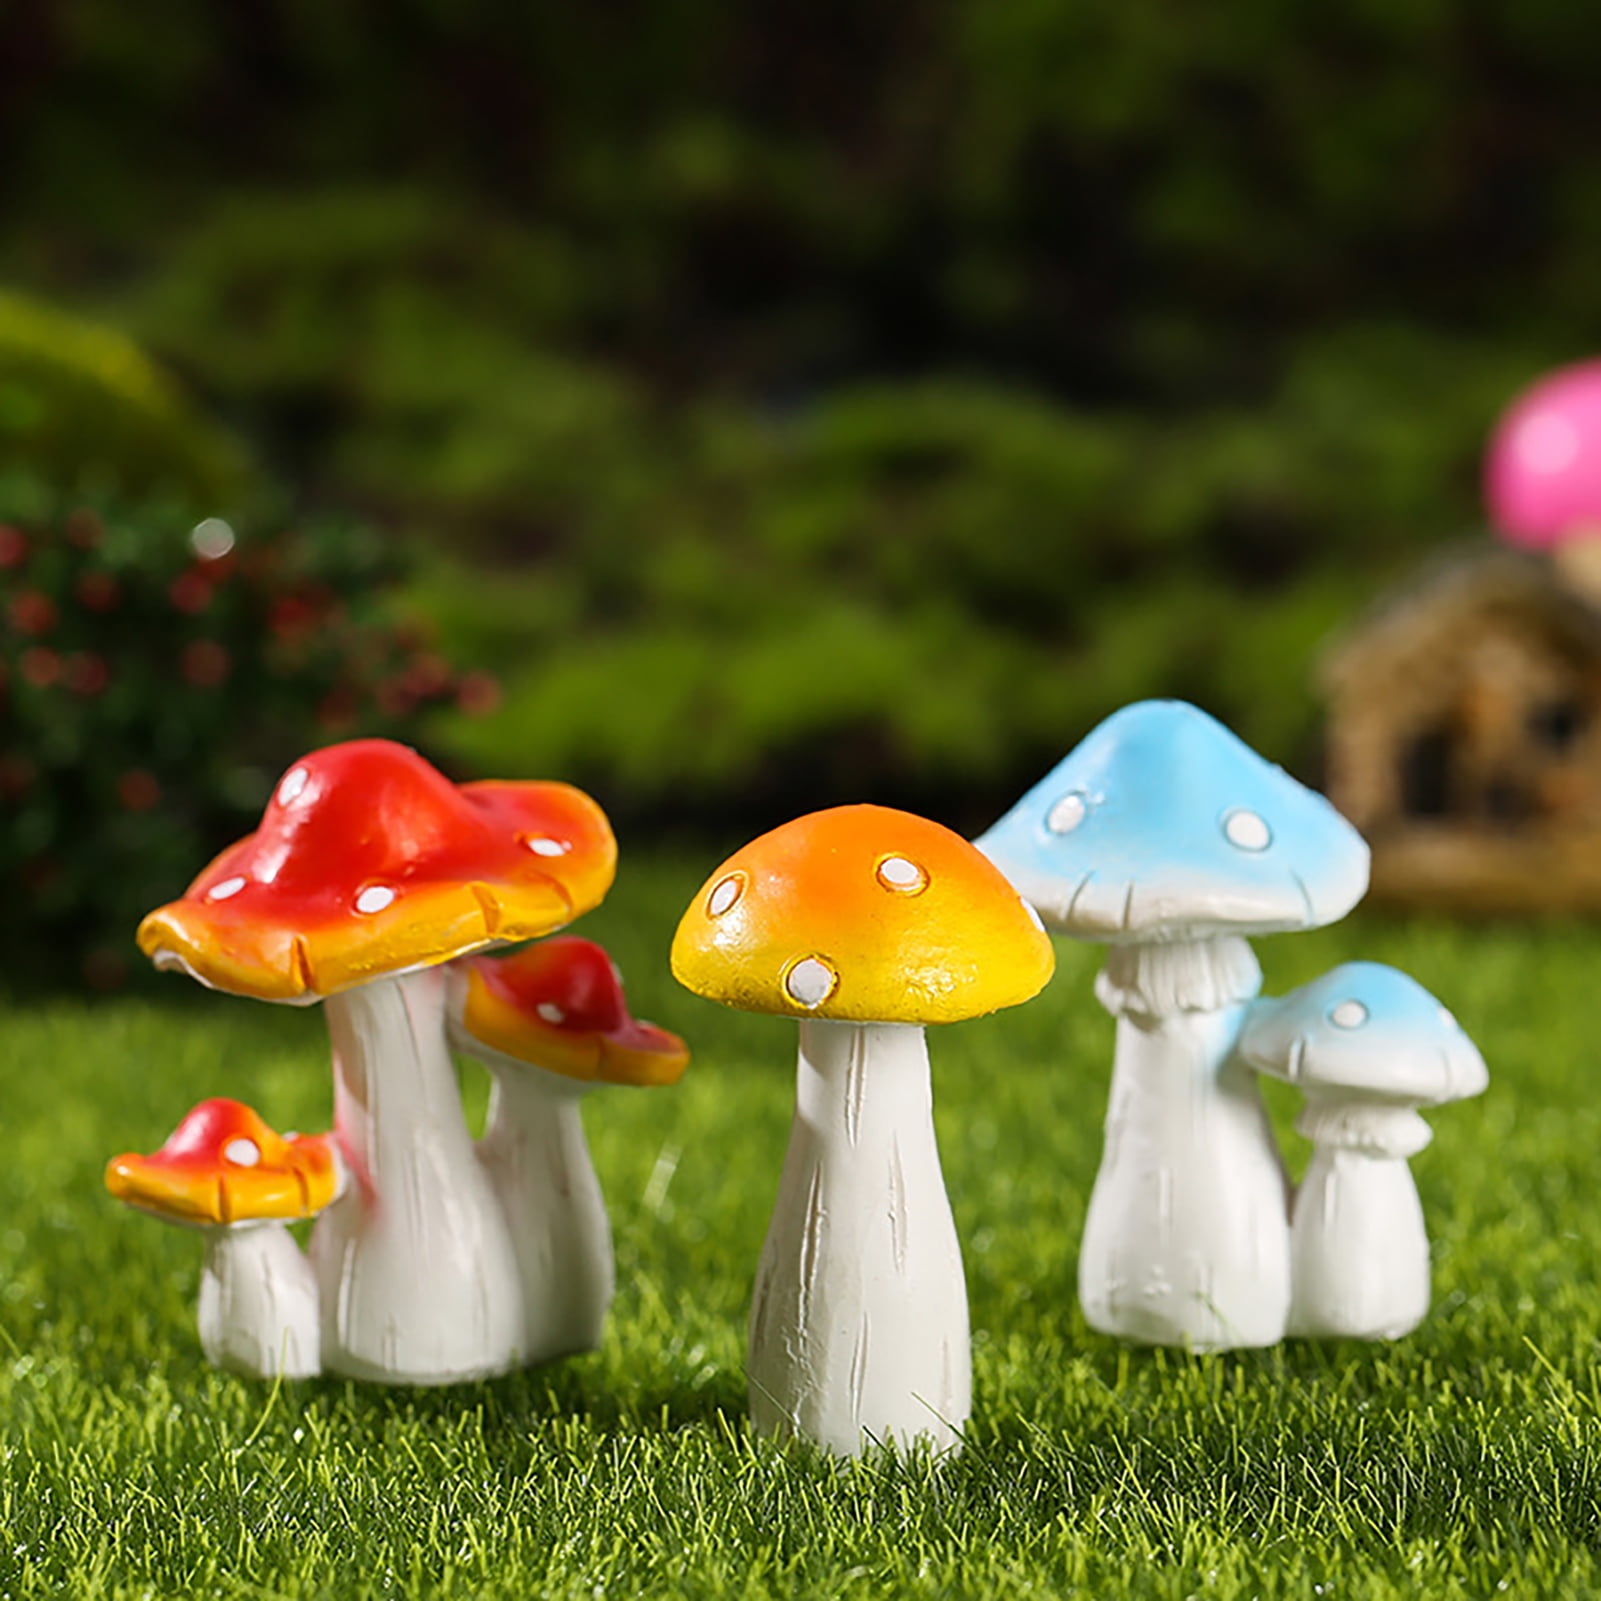 Details about   20PCS Mushroom Fairy Garden Miniatures Accessories Resin Micro Landscape Craft. 